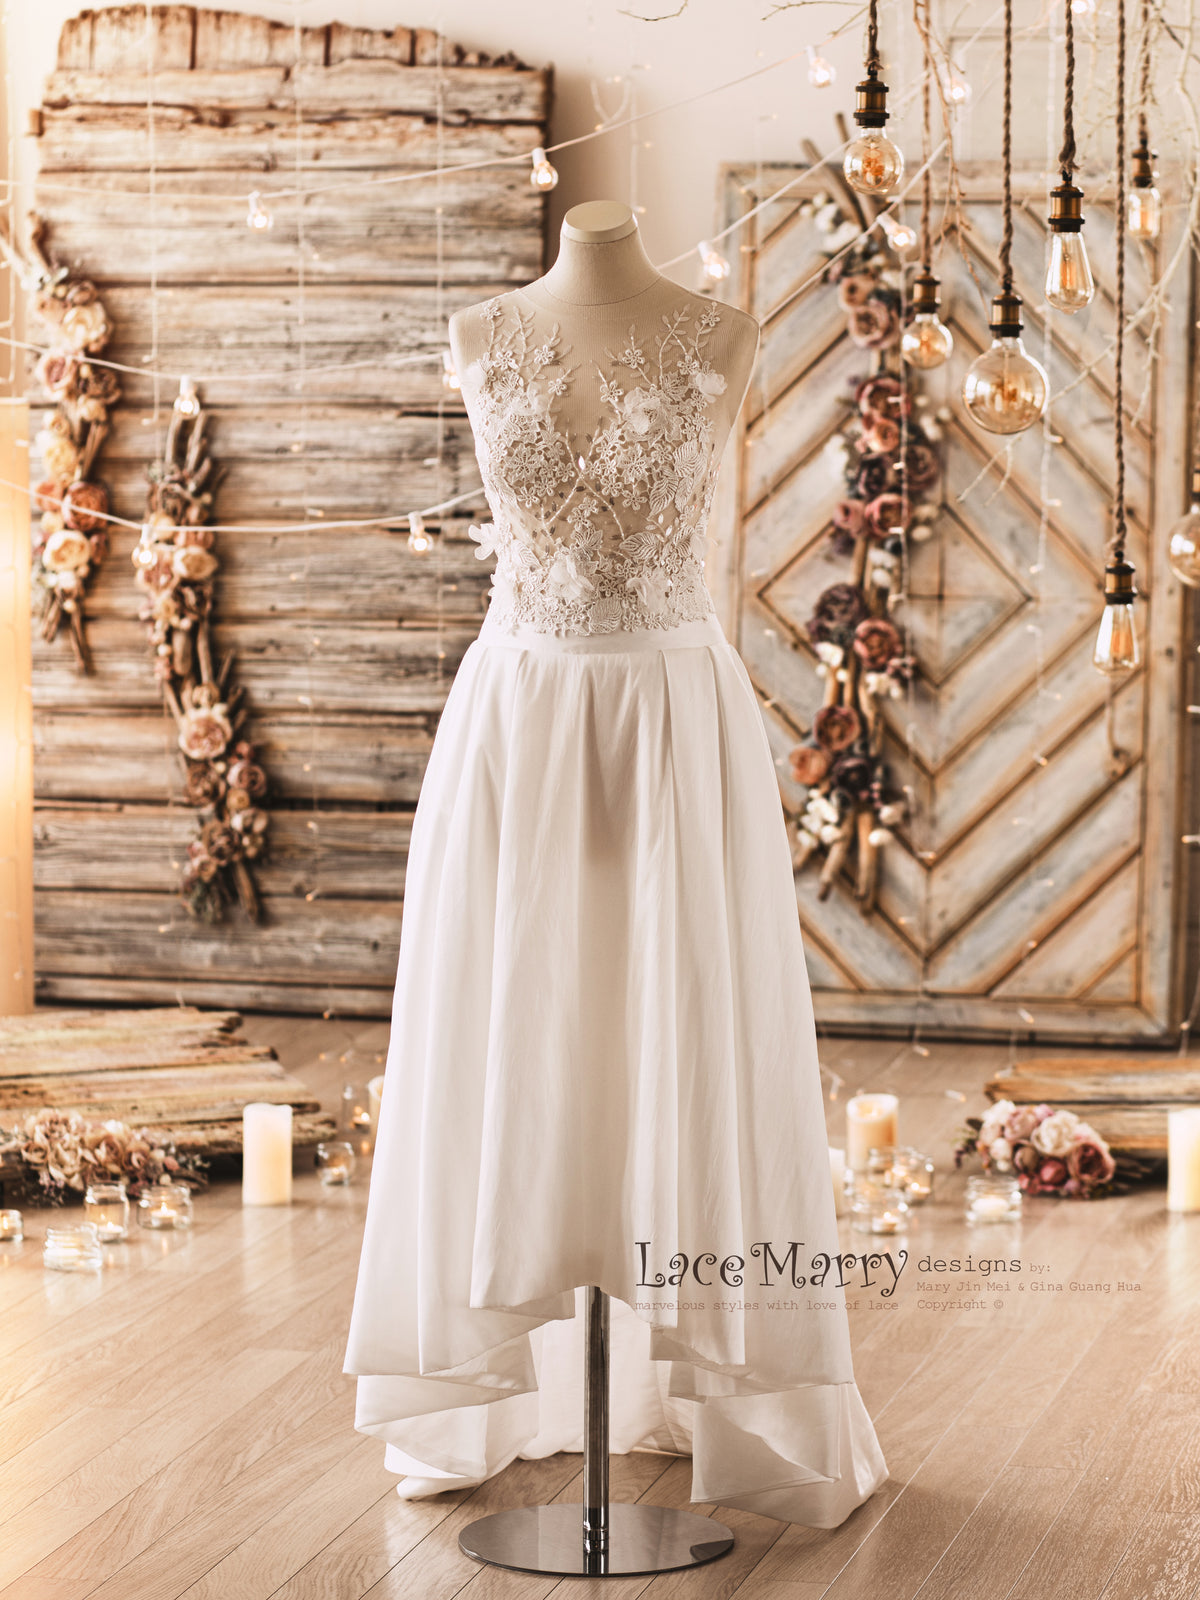 Lace Wedding Dress High Neck Two Piece Wedding Dress: Lace -  Poland